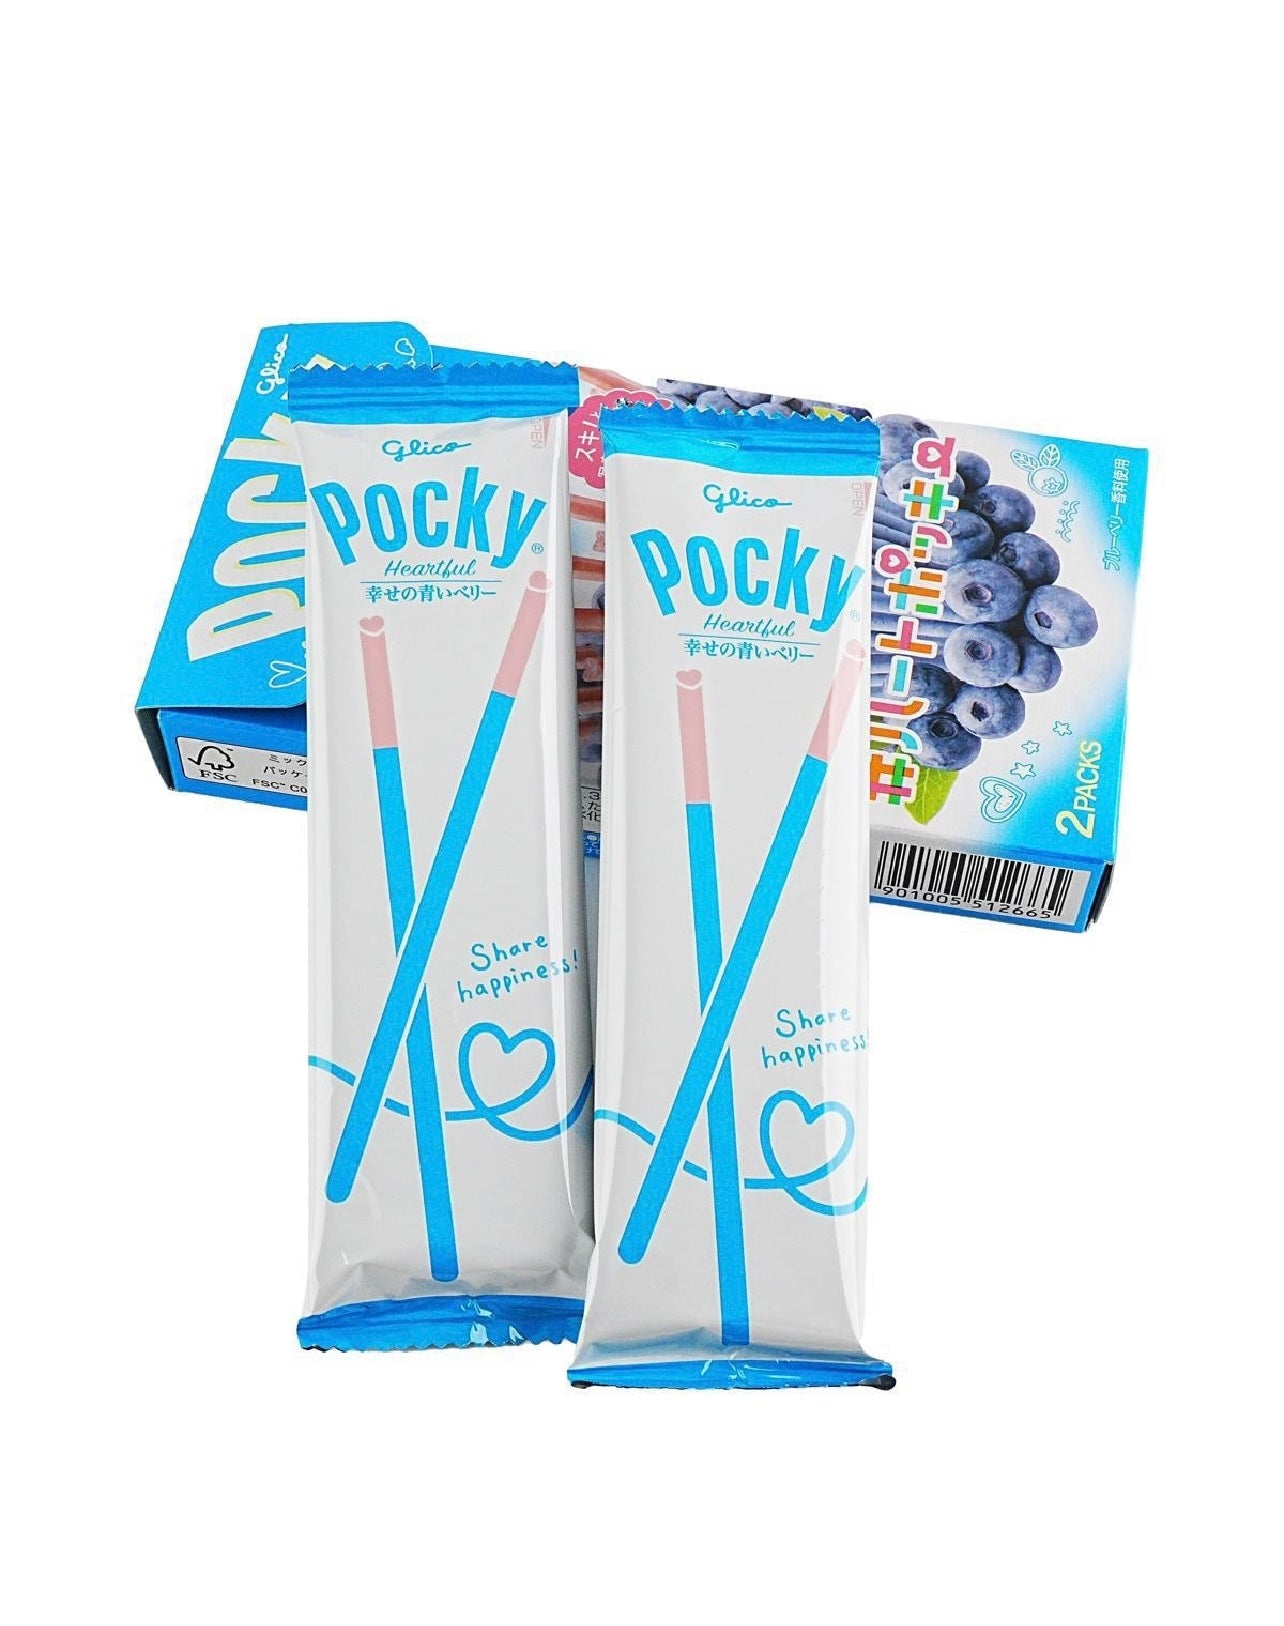 Glico Blue Happy Blueberry Pocky Heart-Shaped Cookie Sticks 2pcs Japan